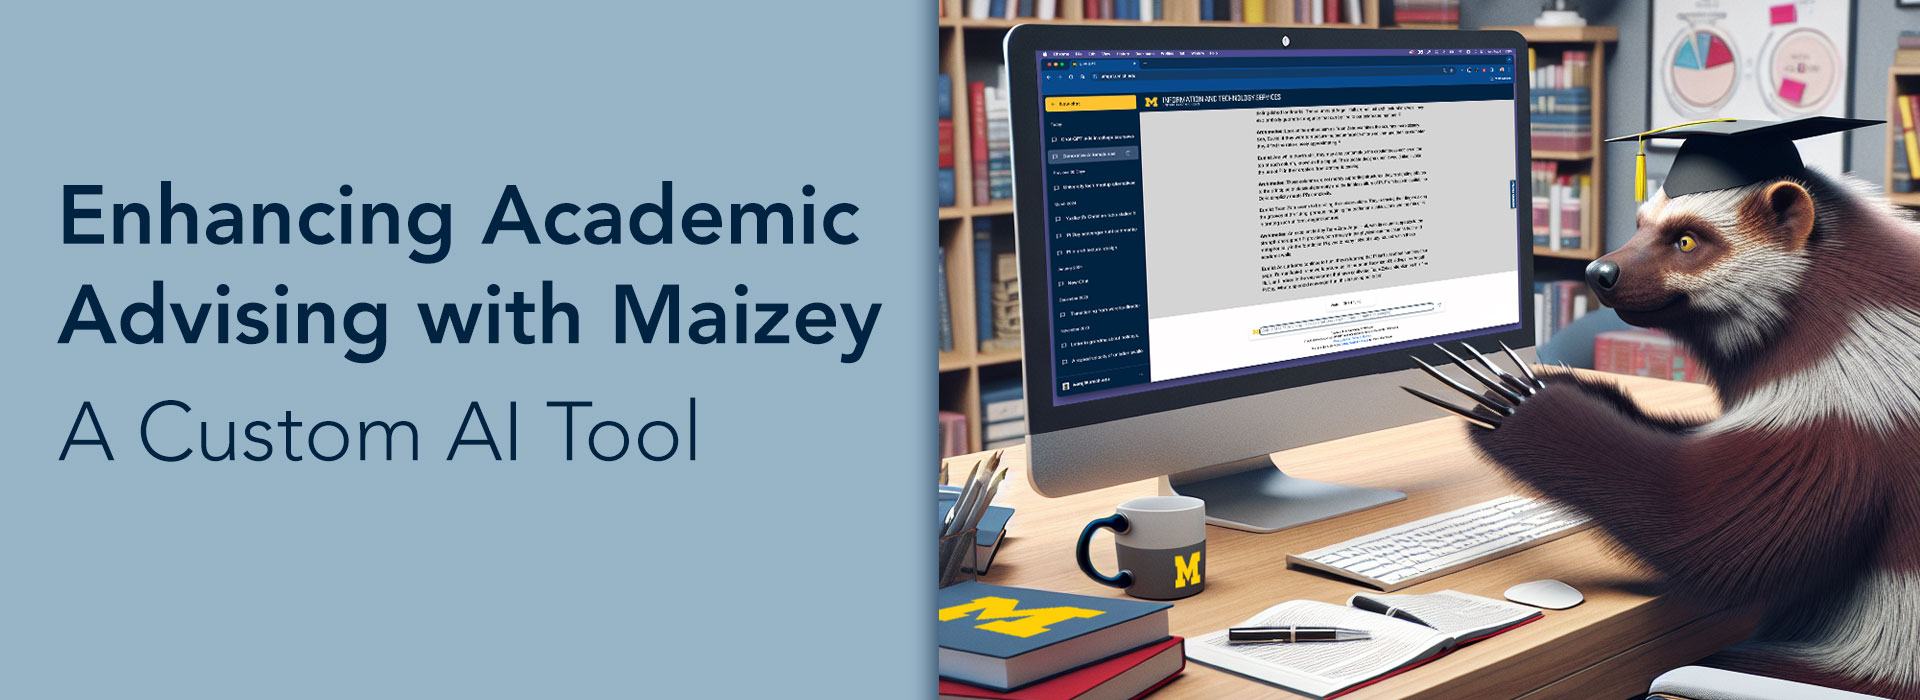 Enhancing Academic Advising with Maizey: A Custom AI Tool